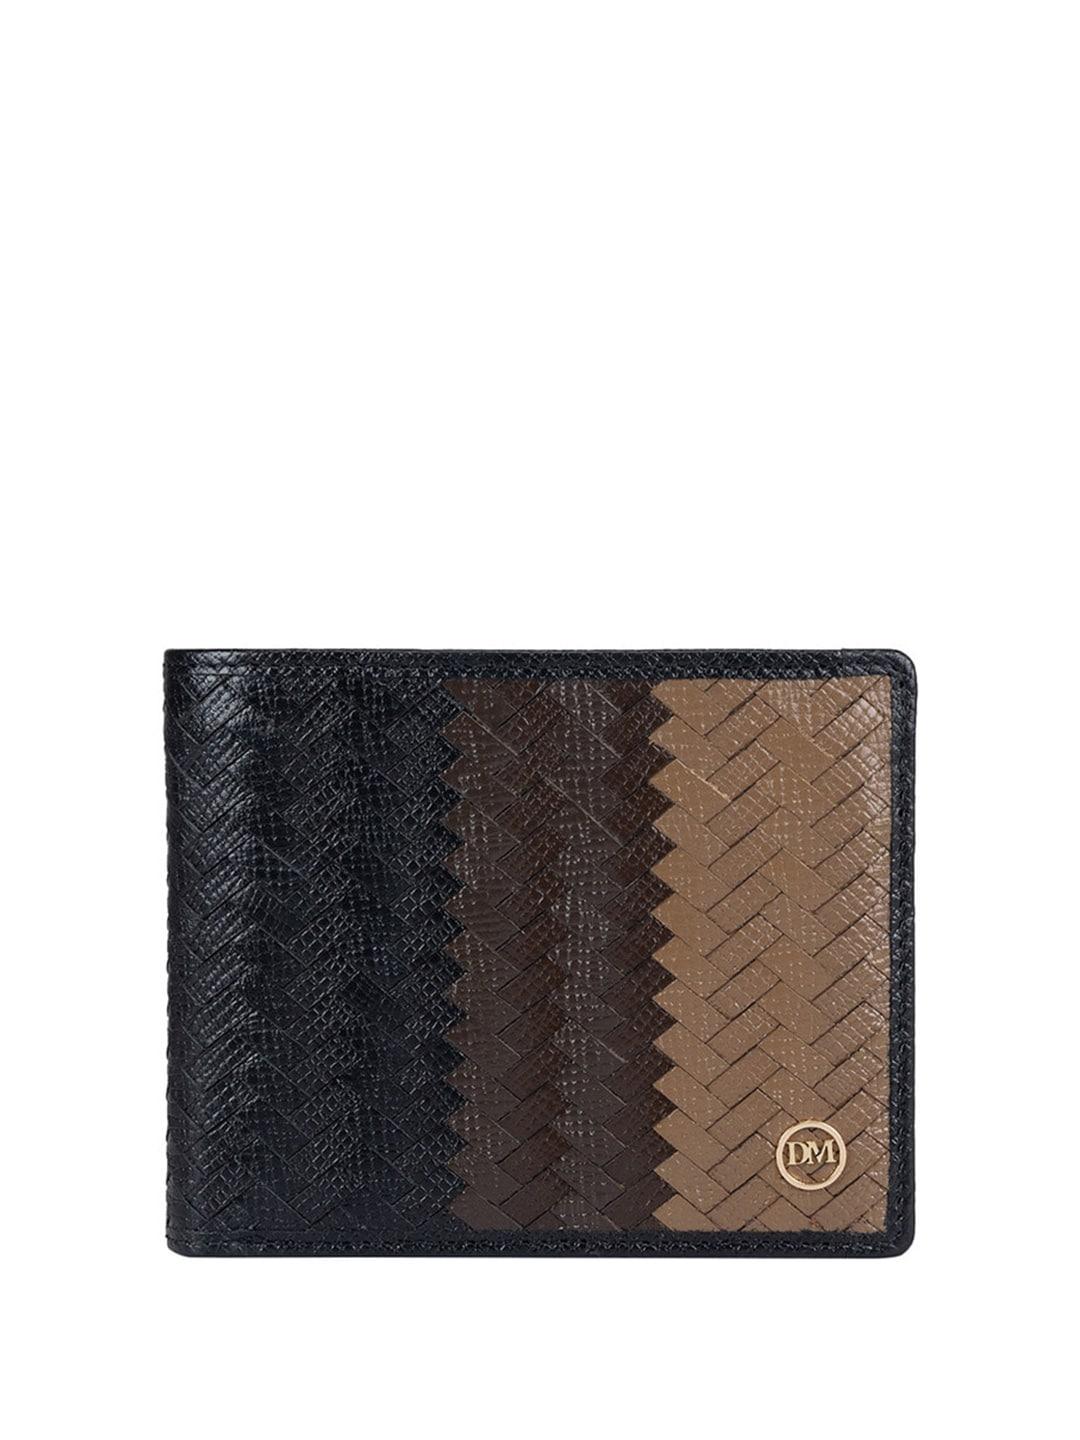 Da Milano Men Black & Brown Geometric Textured Leather Two Fold Wallet